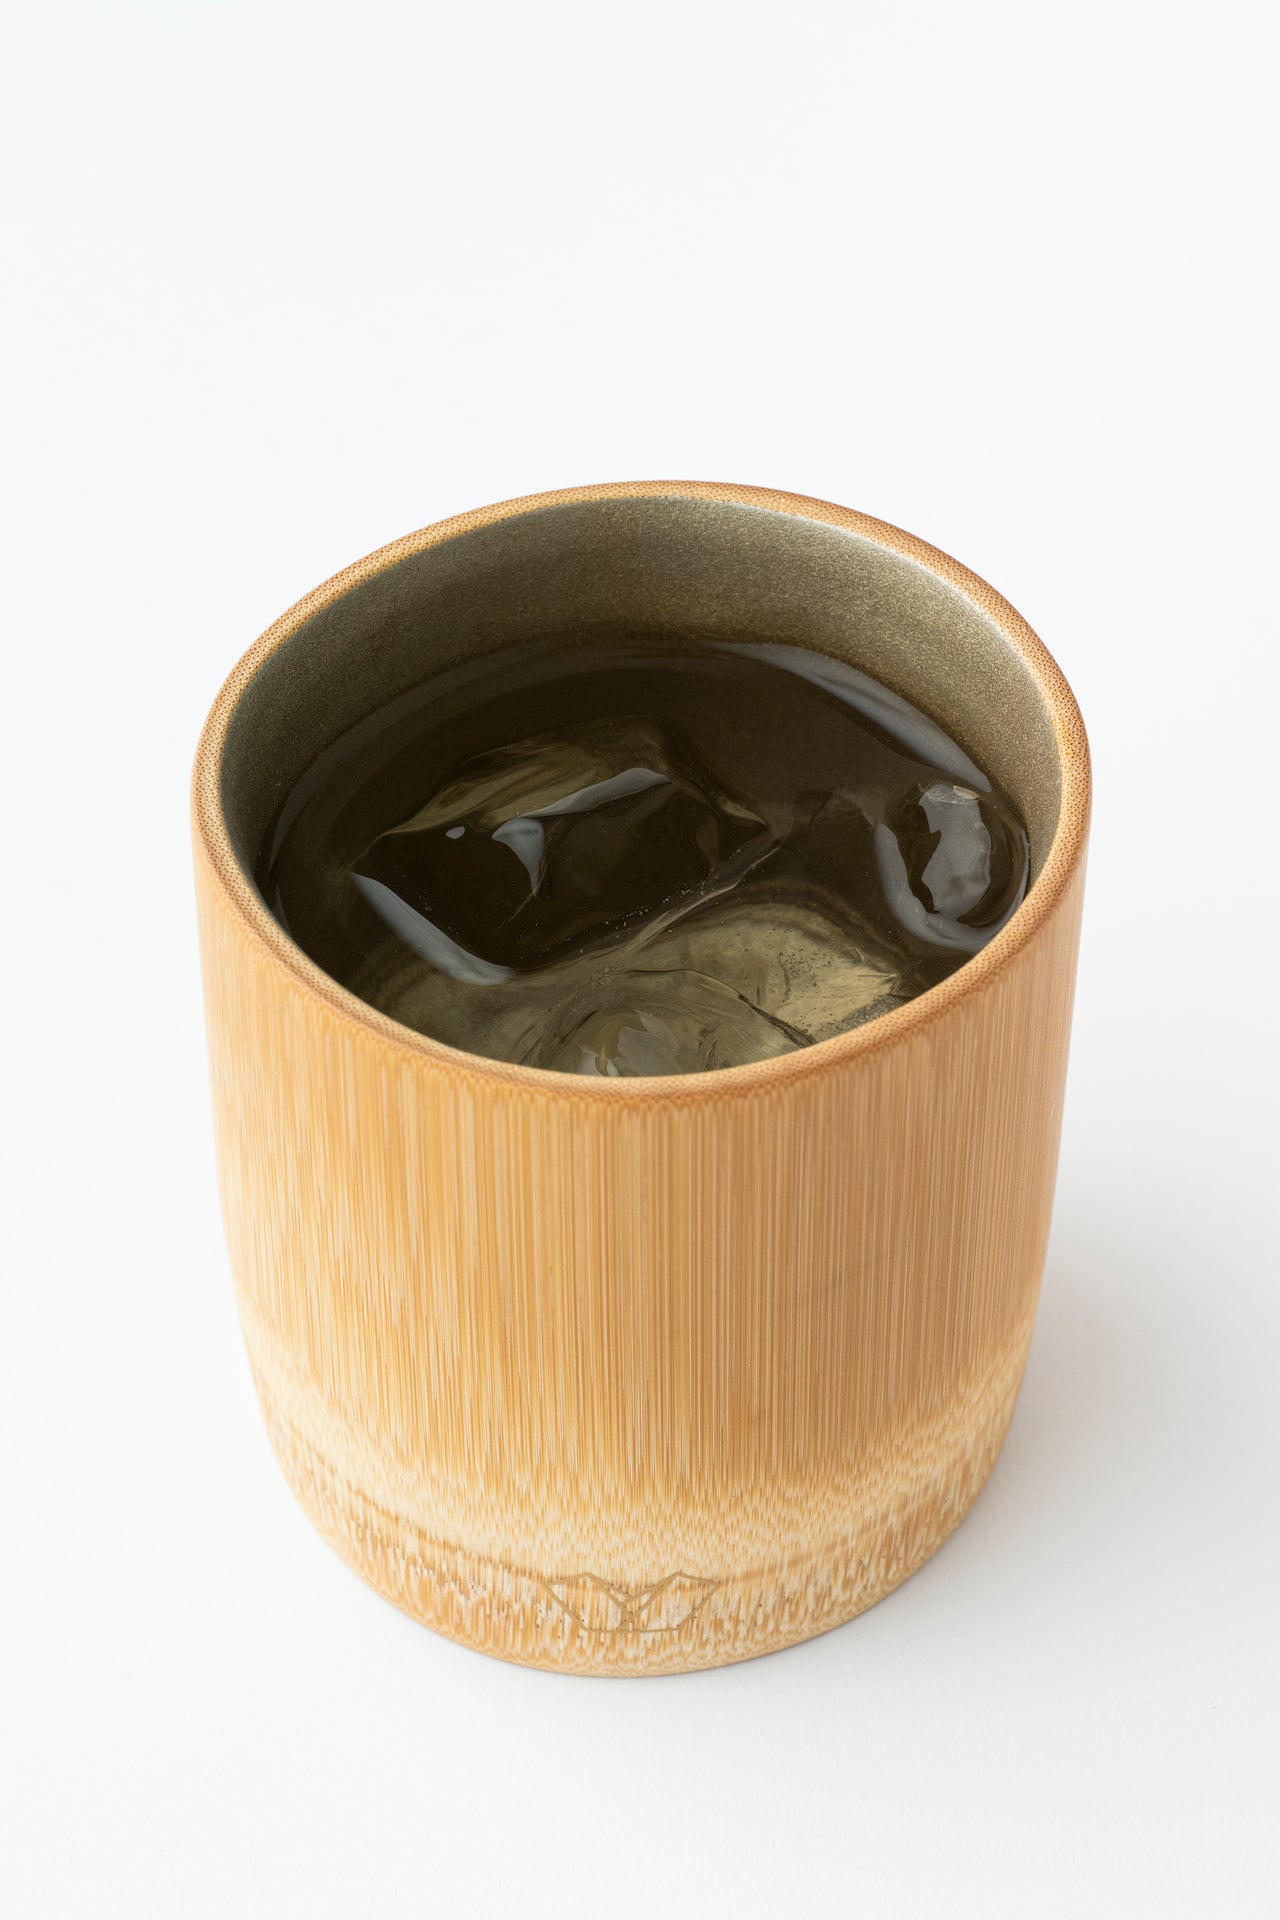 Bamboo Cup : Natural